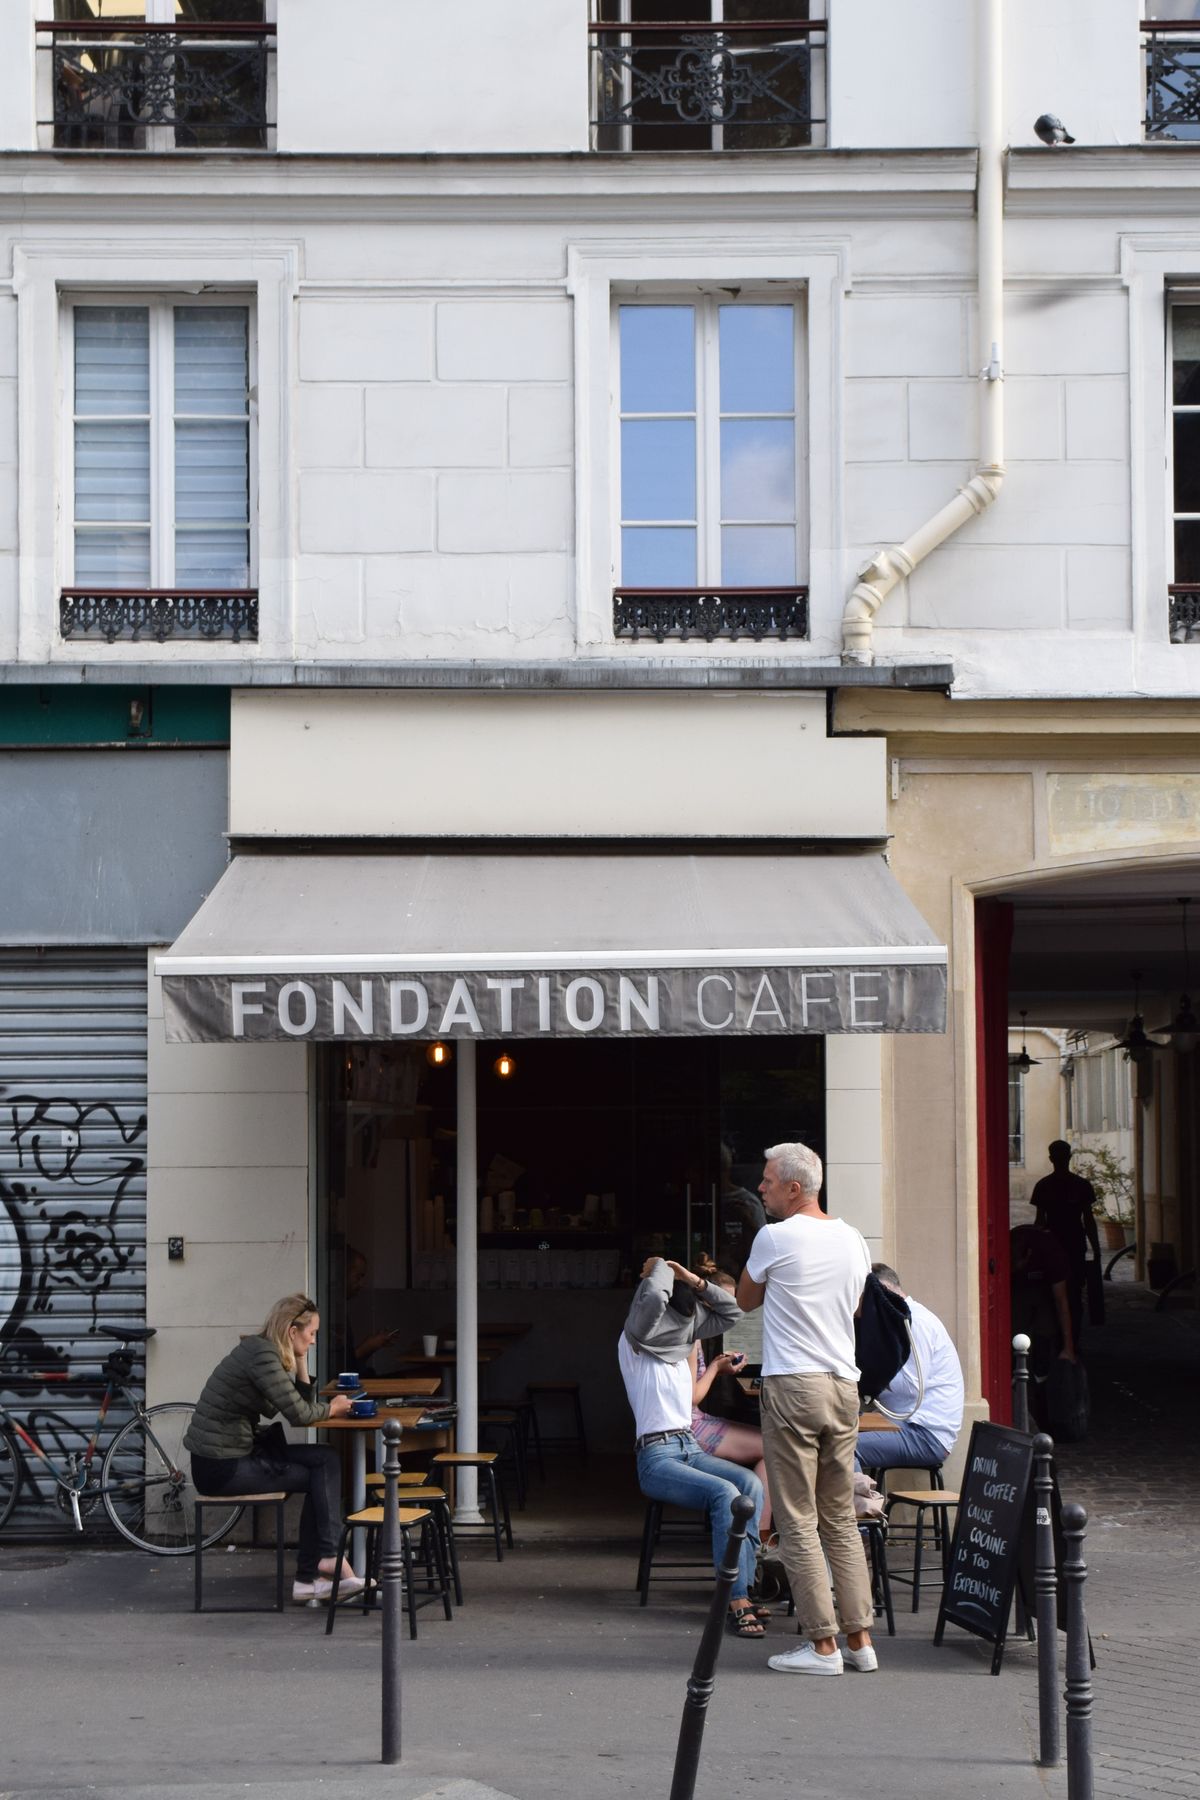 Fondation Cafe, Paris